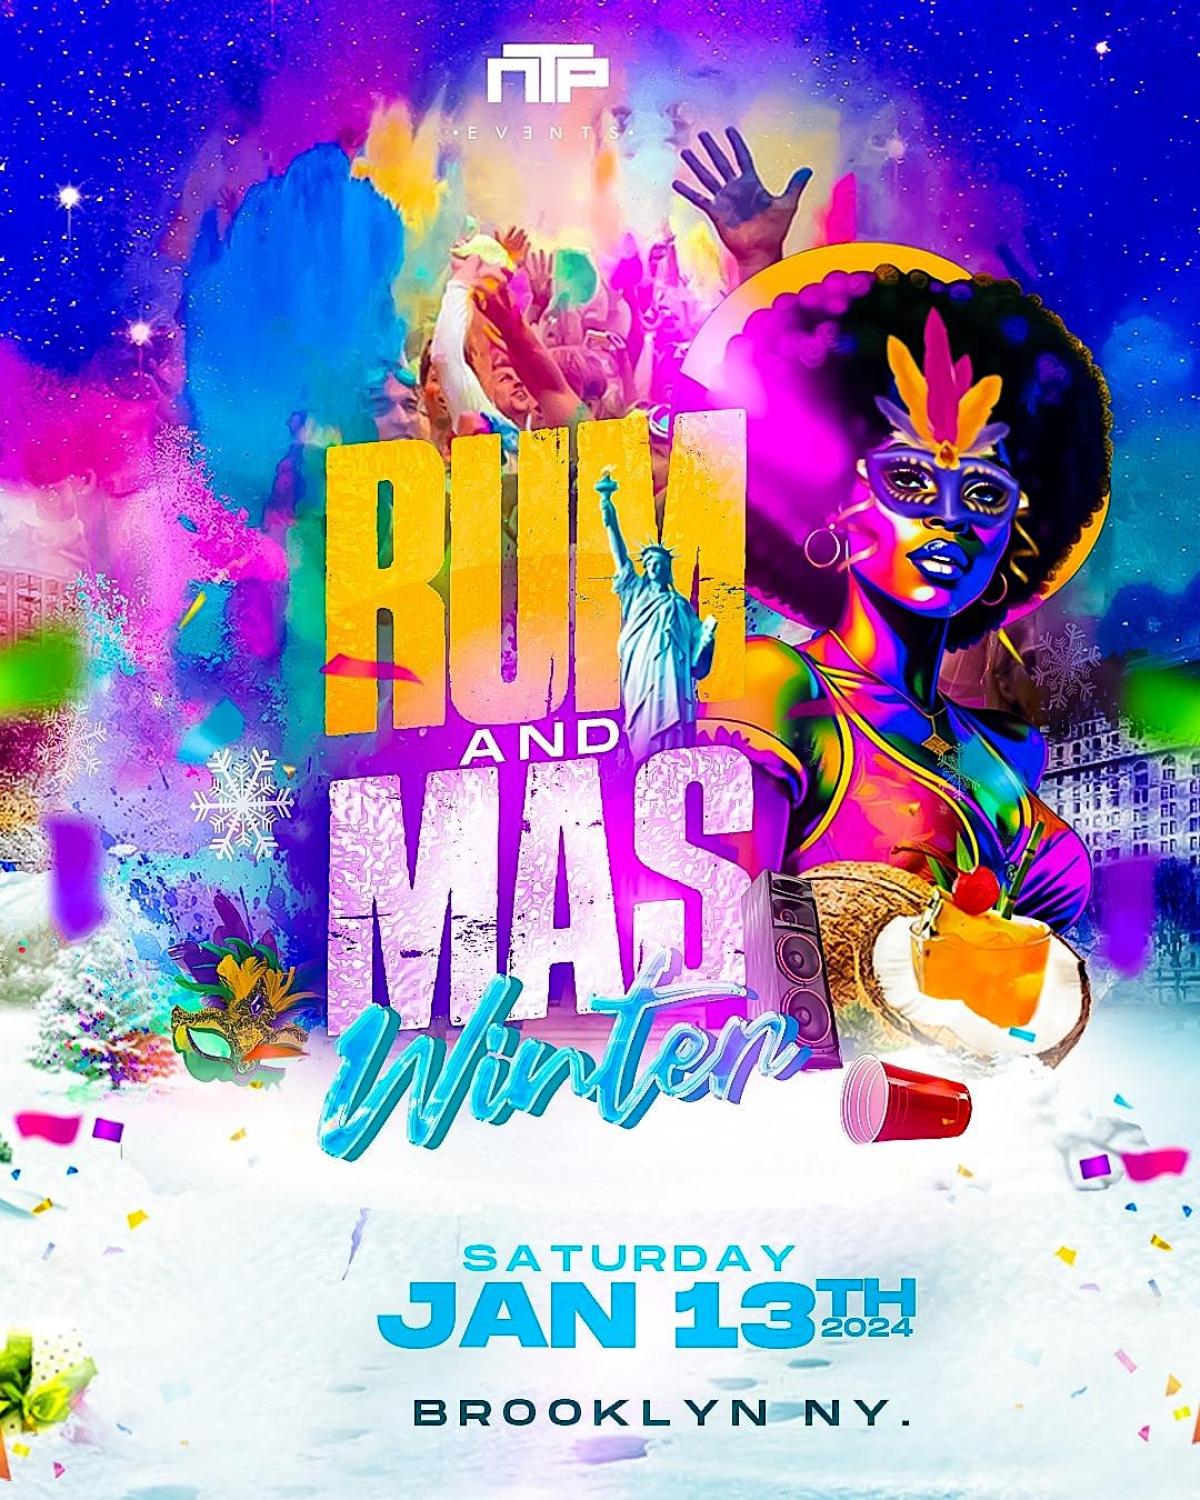 Rum & Mas Winter flyer or graphic.